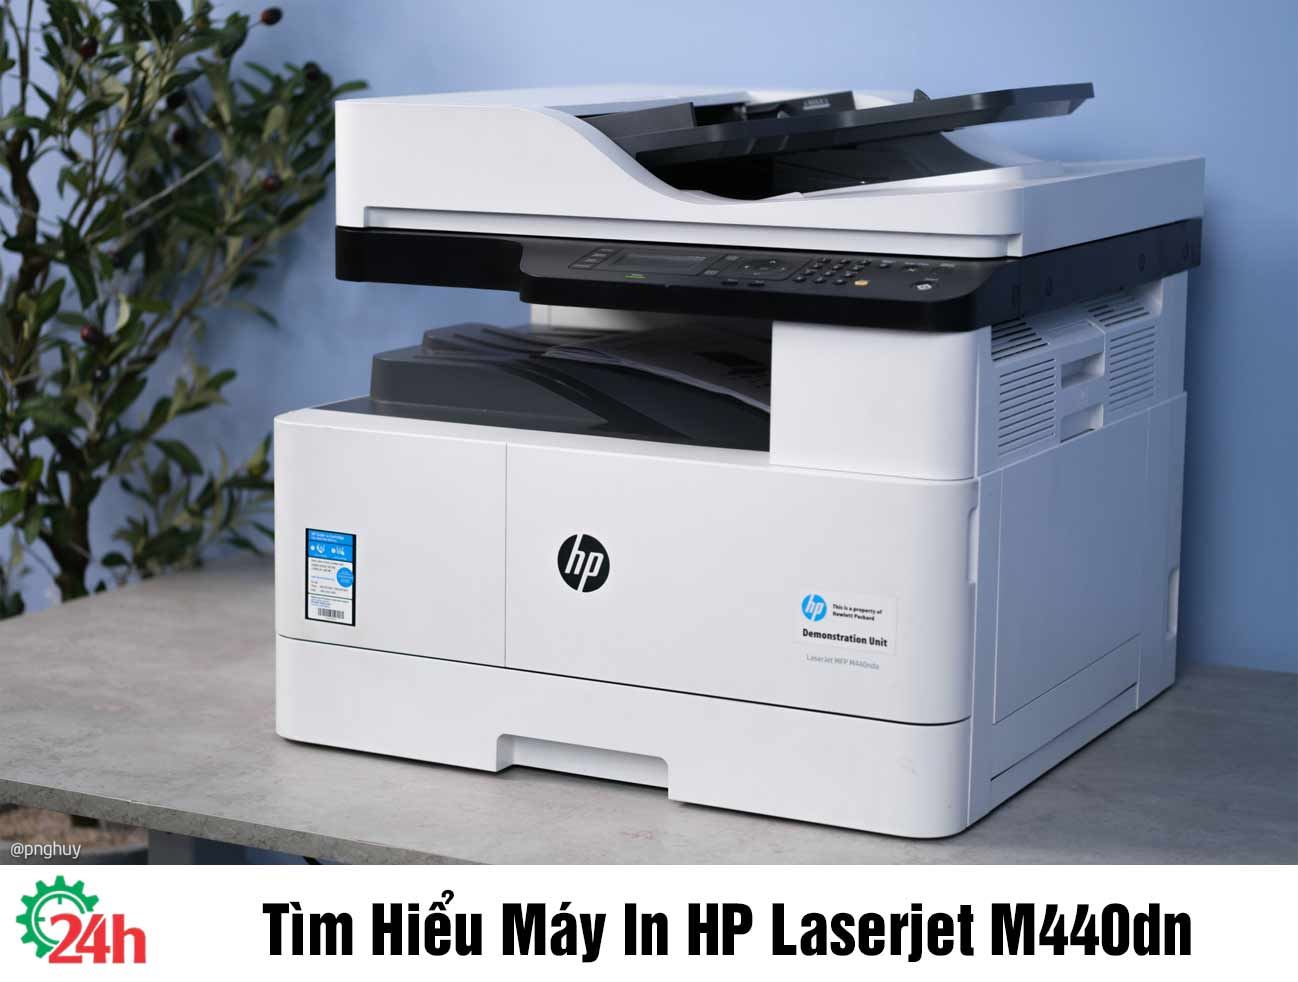 tìm hiểu máy in HP Laserjet M440dn